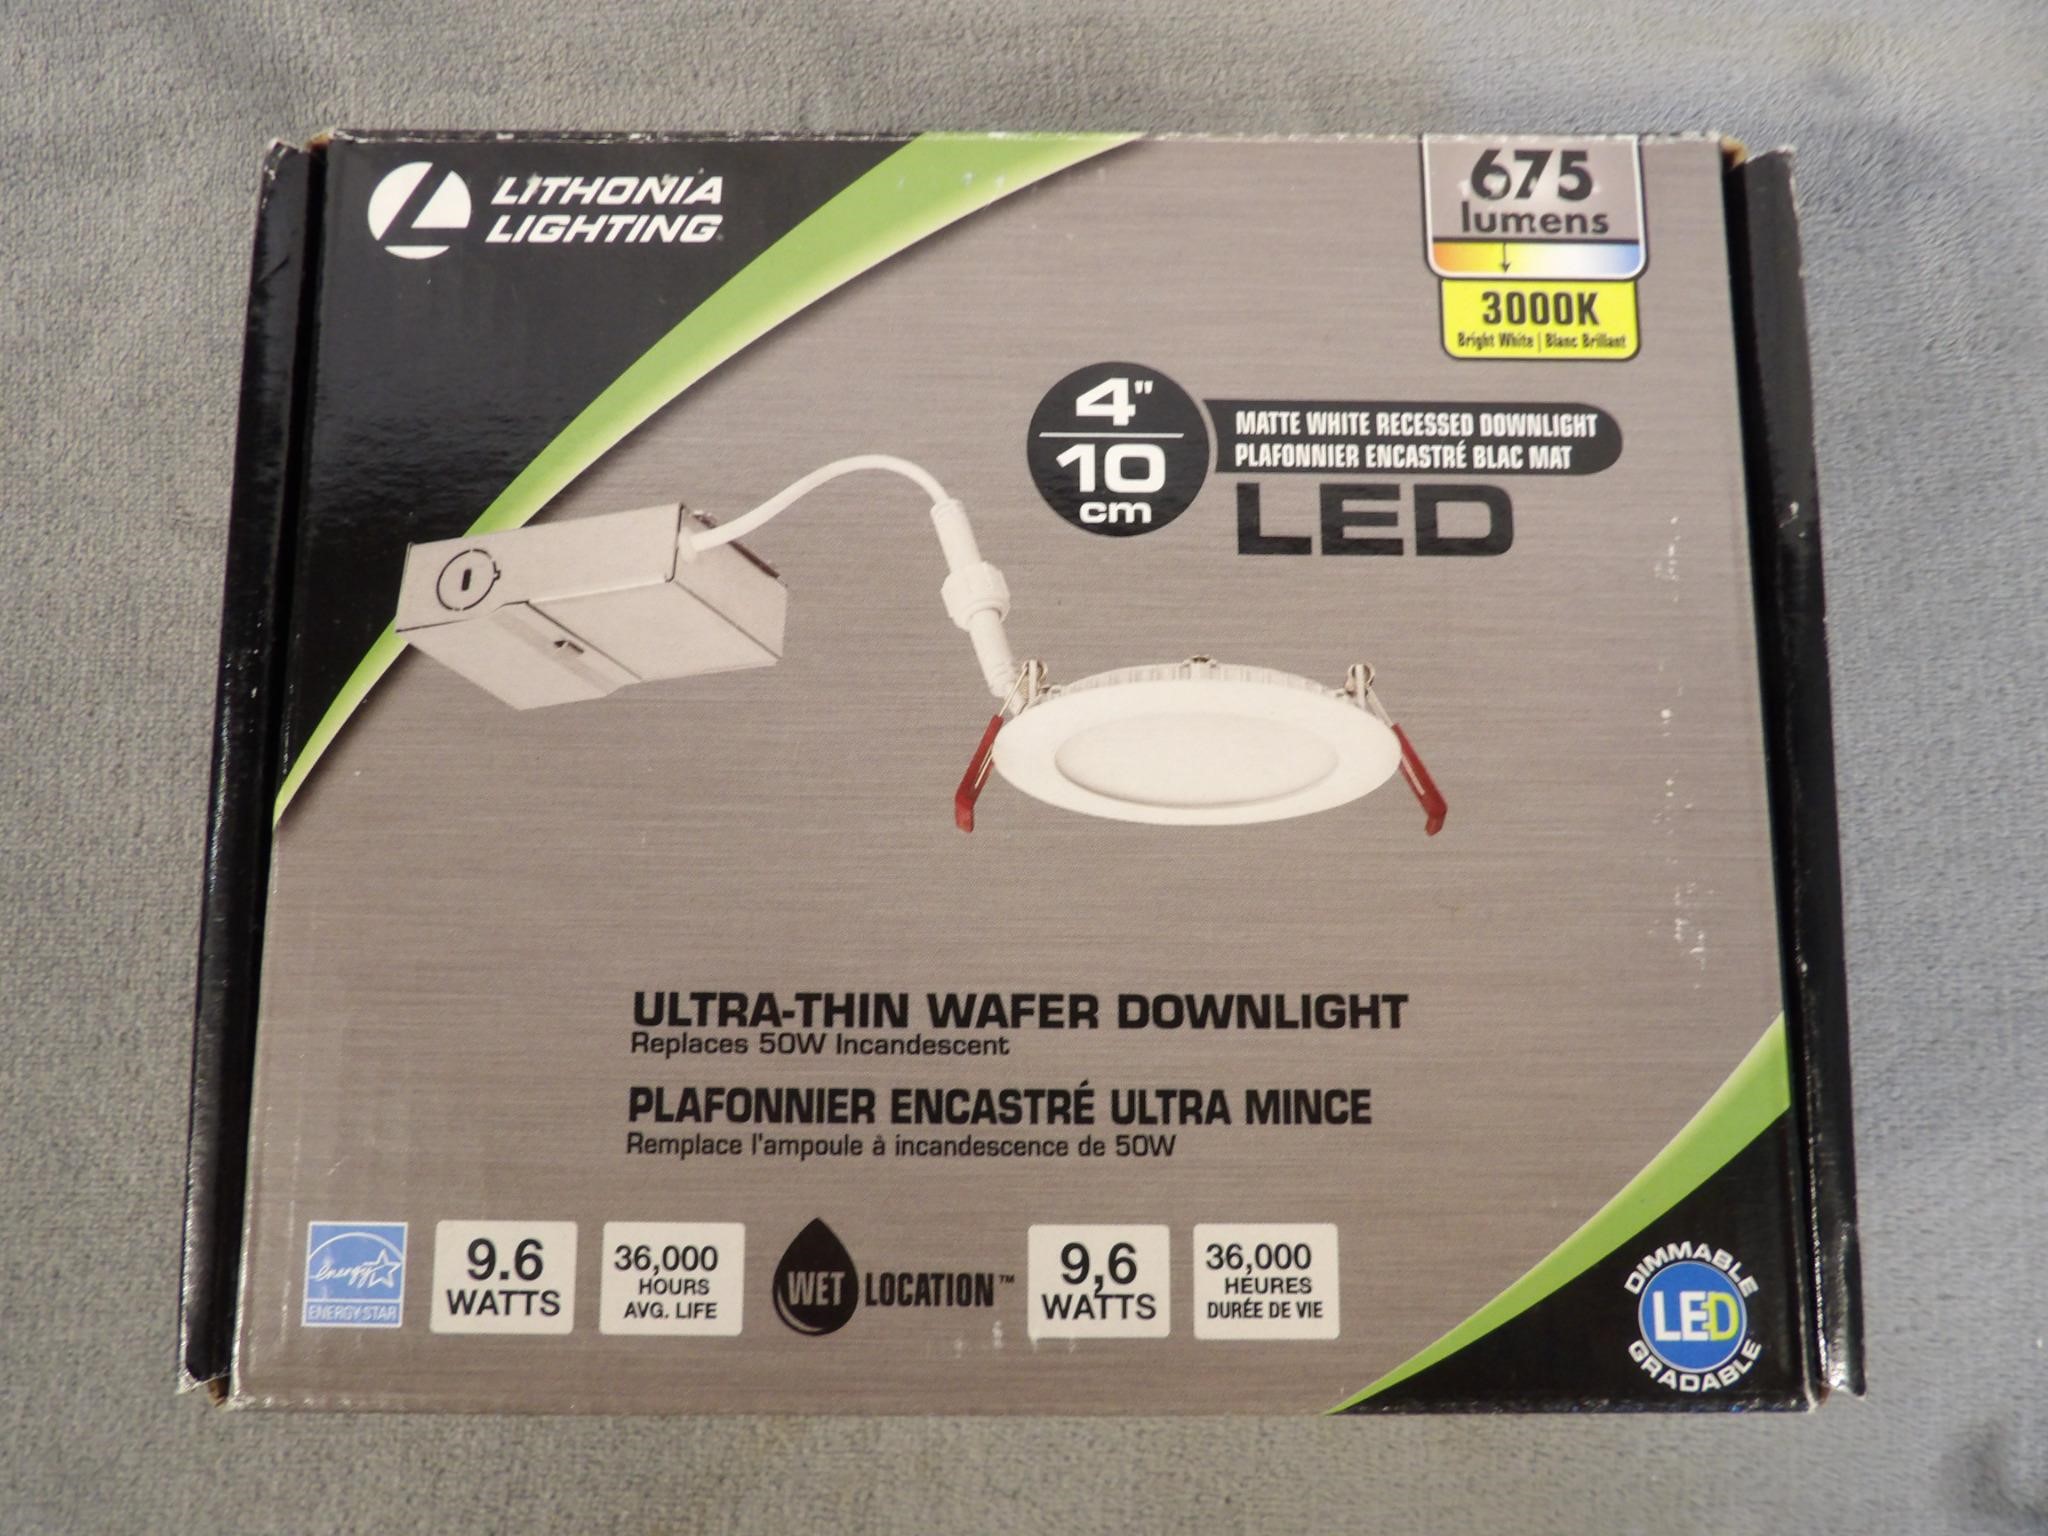 Lithonia Lighting 4" Ultra-thin wafer downlight